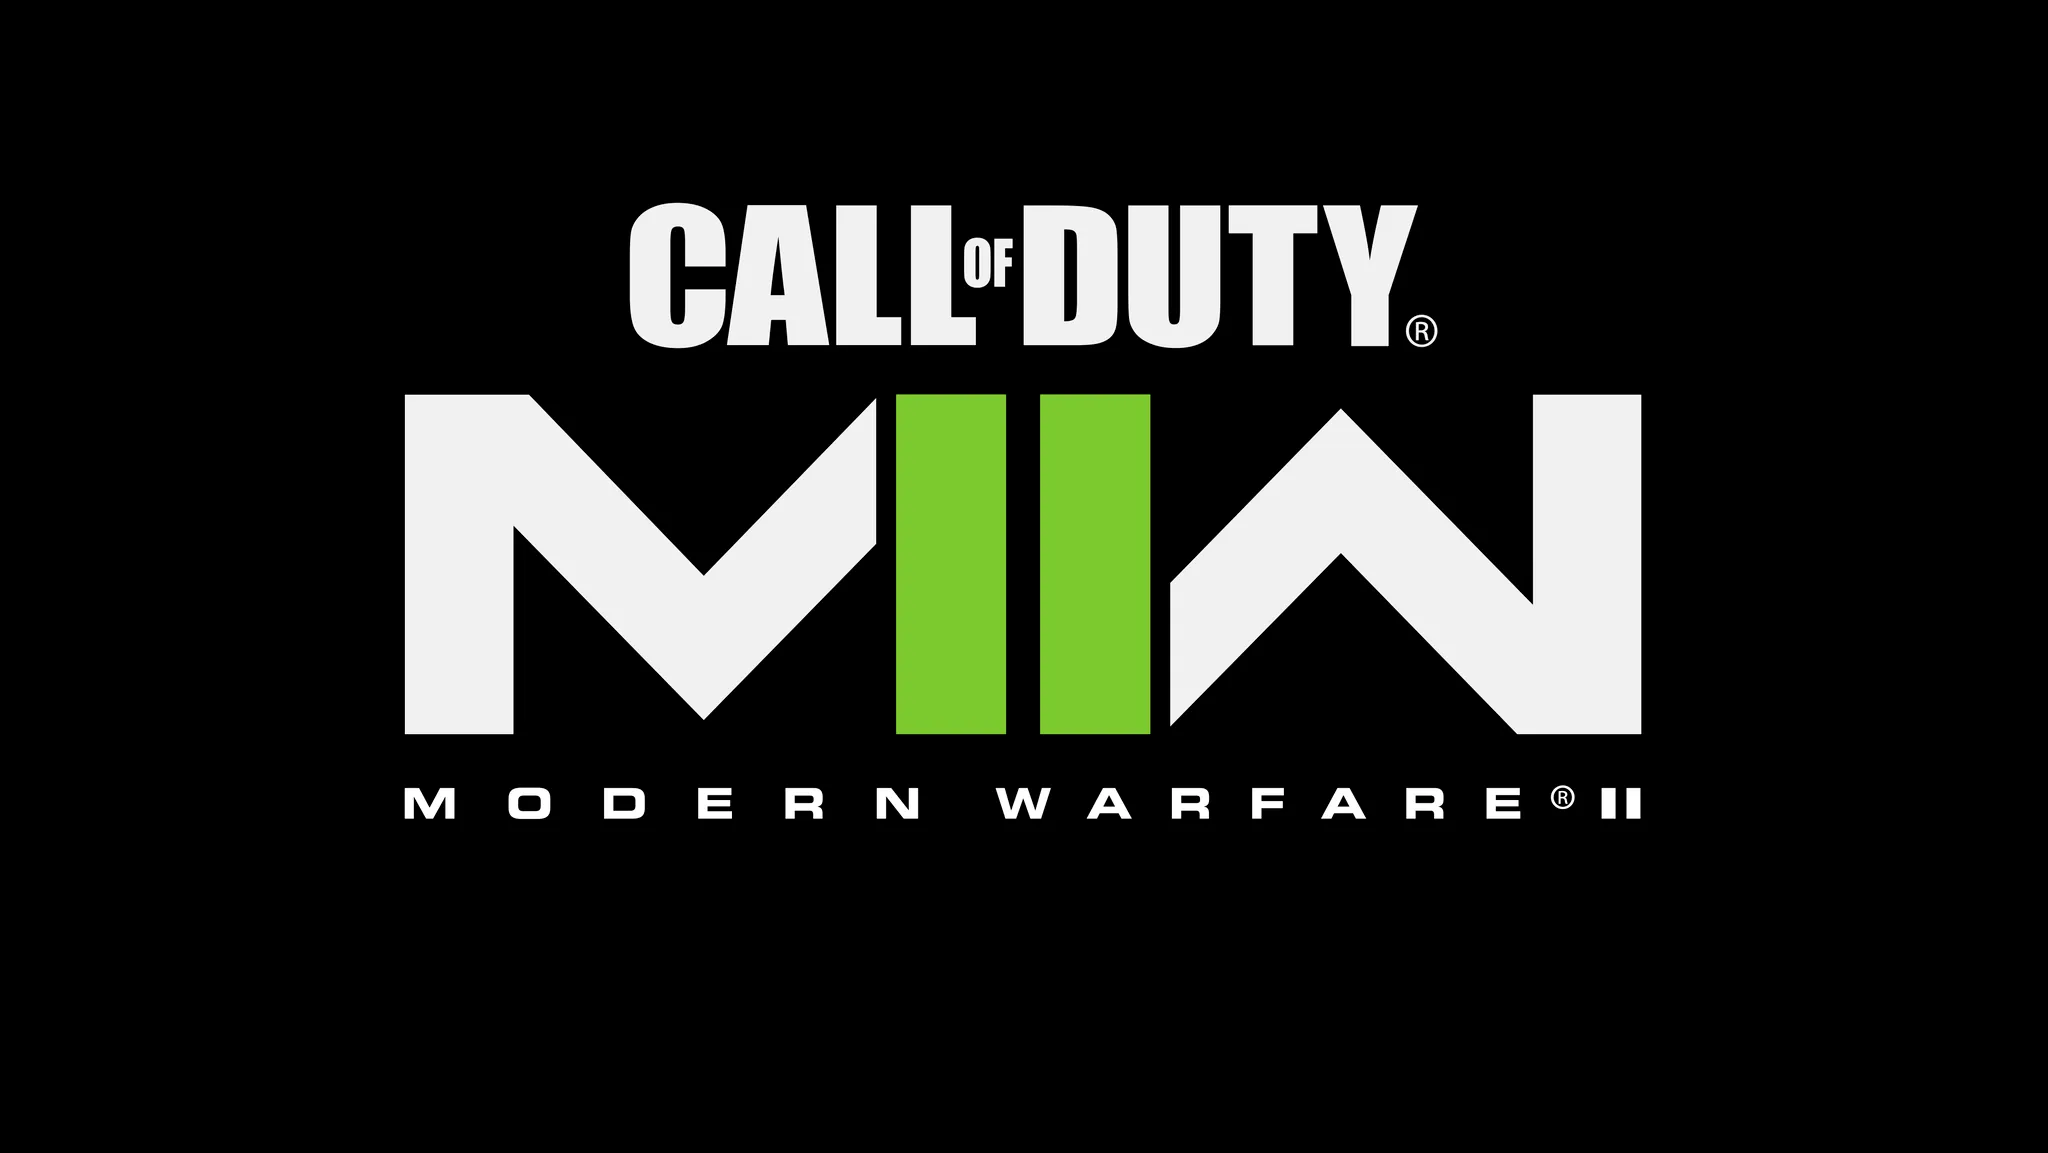 Reviews Call of Duty: Modern Warfare II - Beta Access